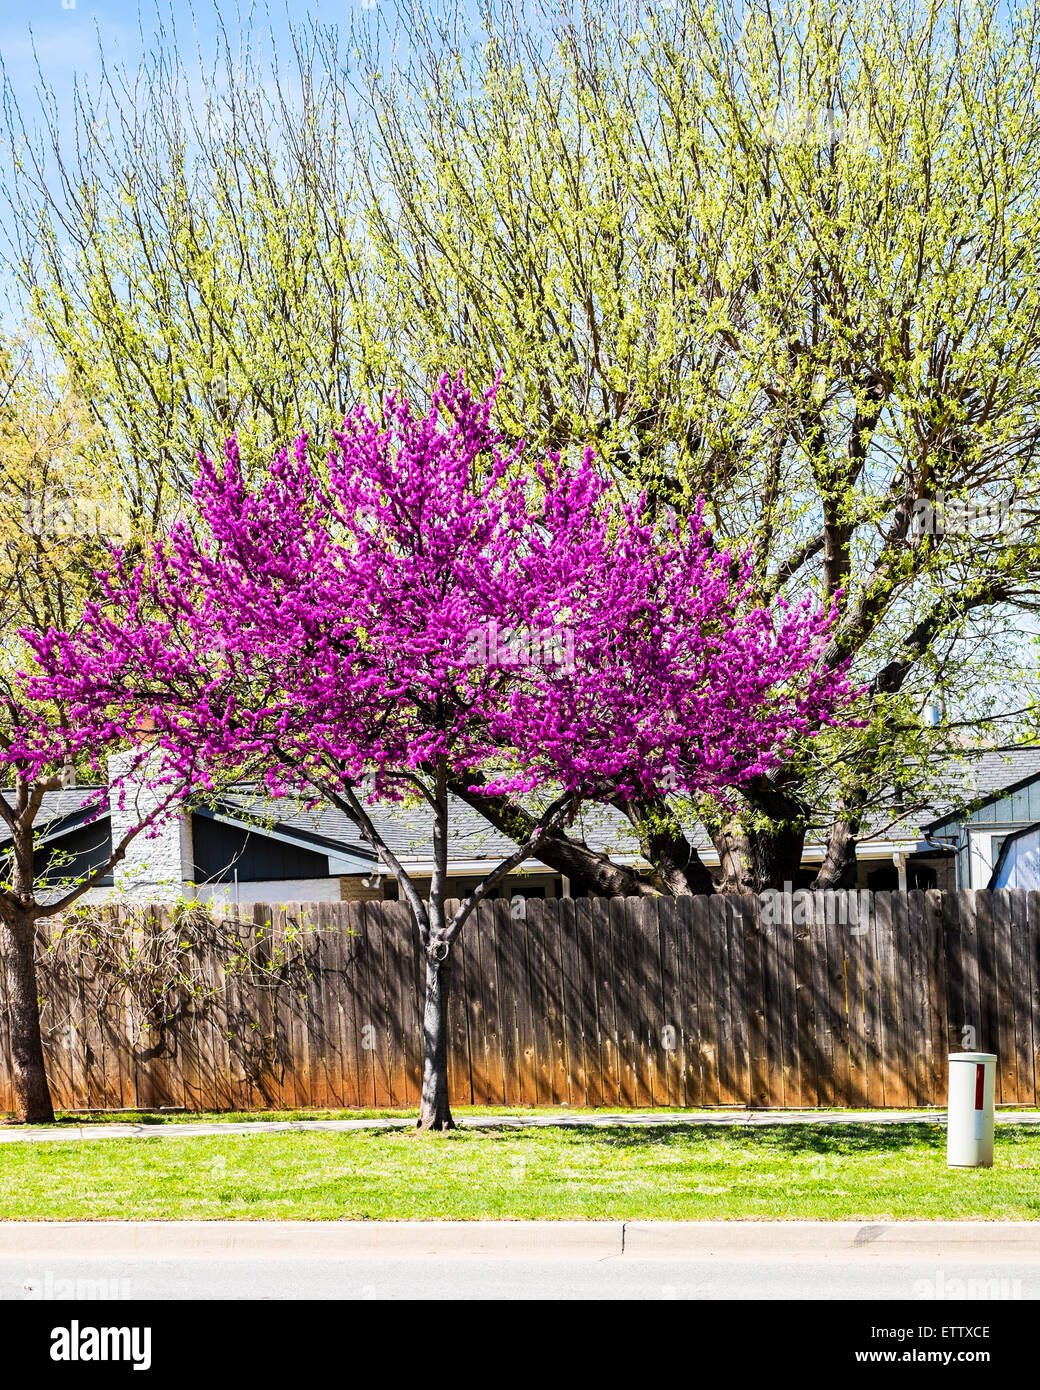 An eastern redbud tree, Cercis canadensis, in spring bloom. The redbud is Oklahoma's state tree. Oklahoma City, Oklahoma, USA. Stock Photo